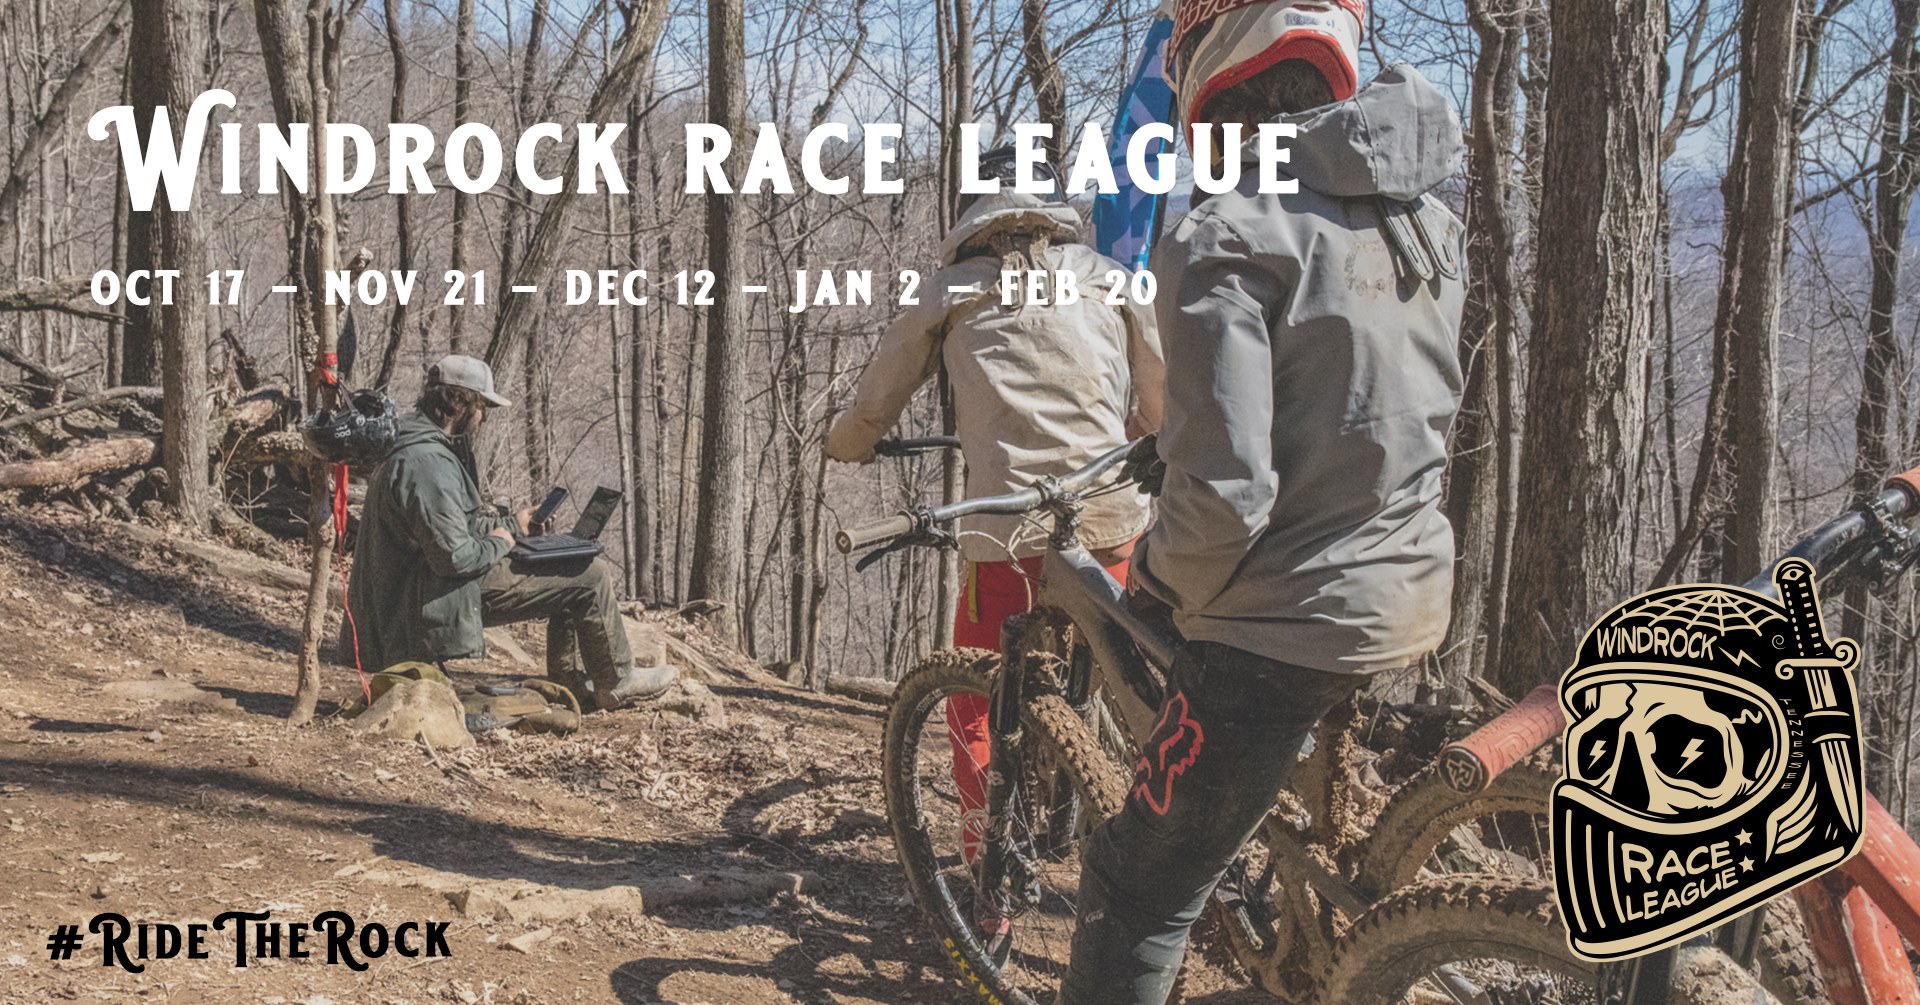 Windrock February Race League